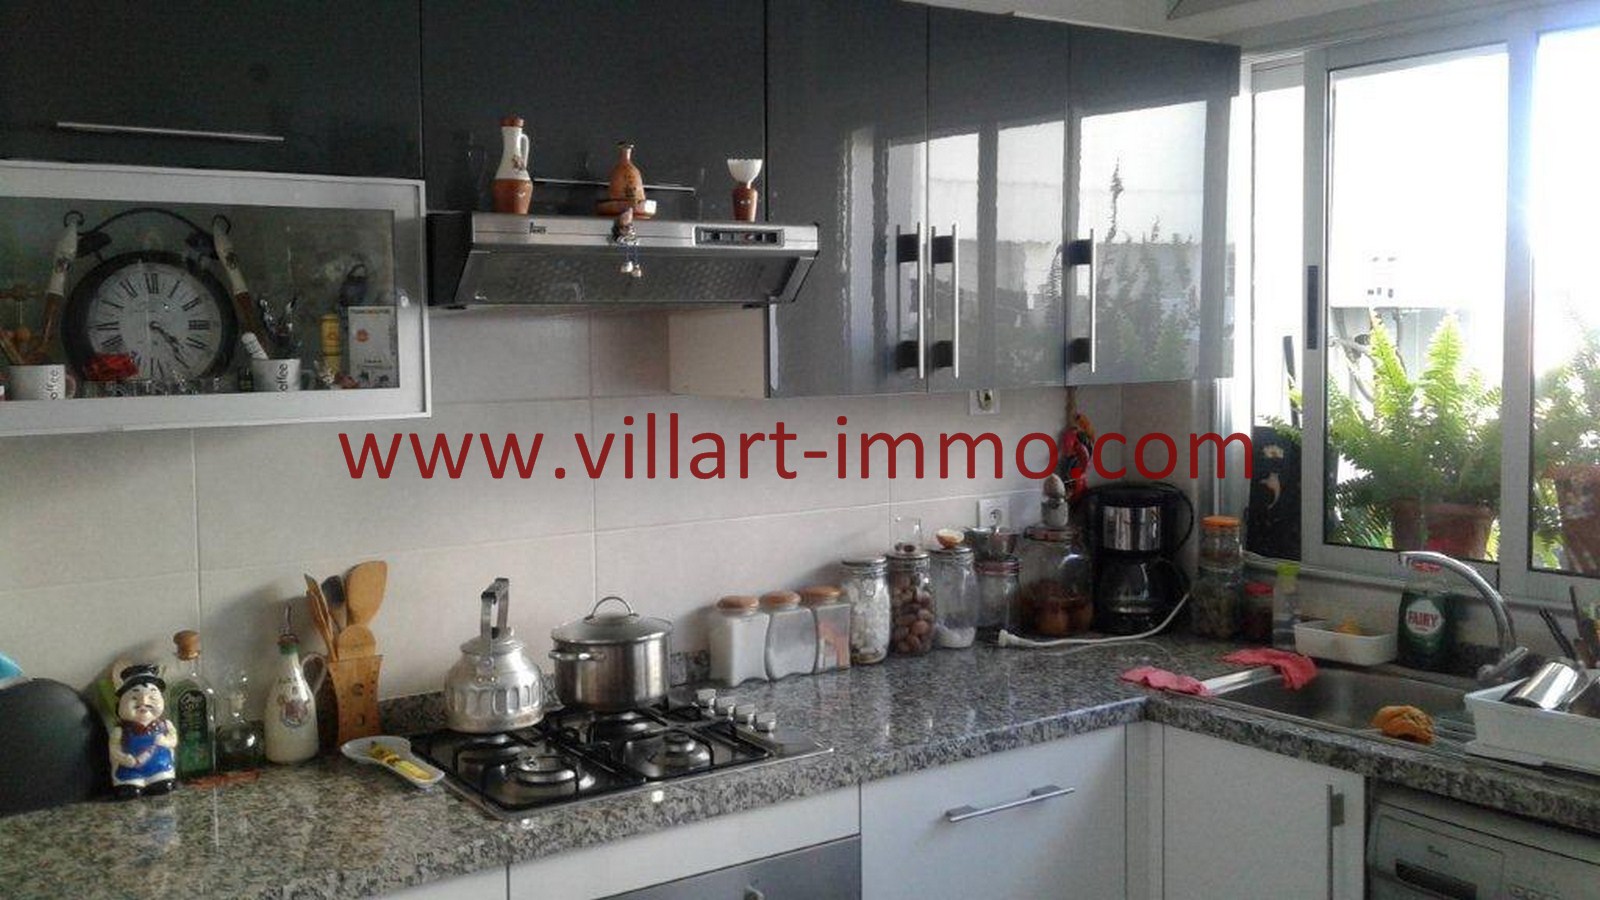 6-A vendre-Appartement-Tanger-Castilla-Cuisine-VA473-Villart immo-Agence Immobilière